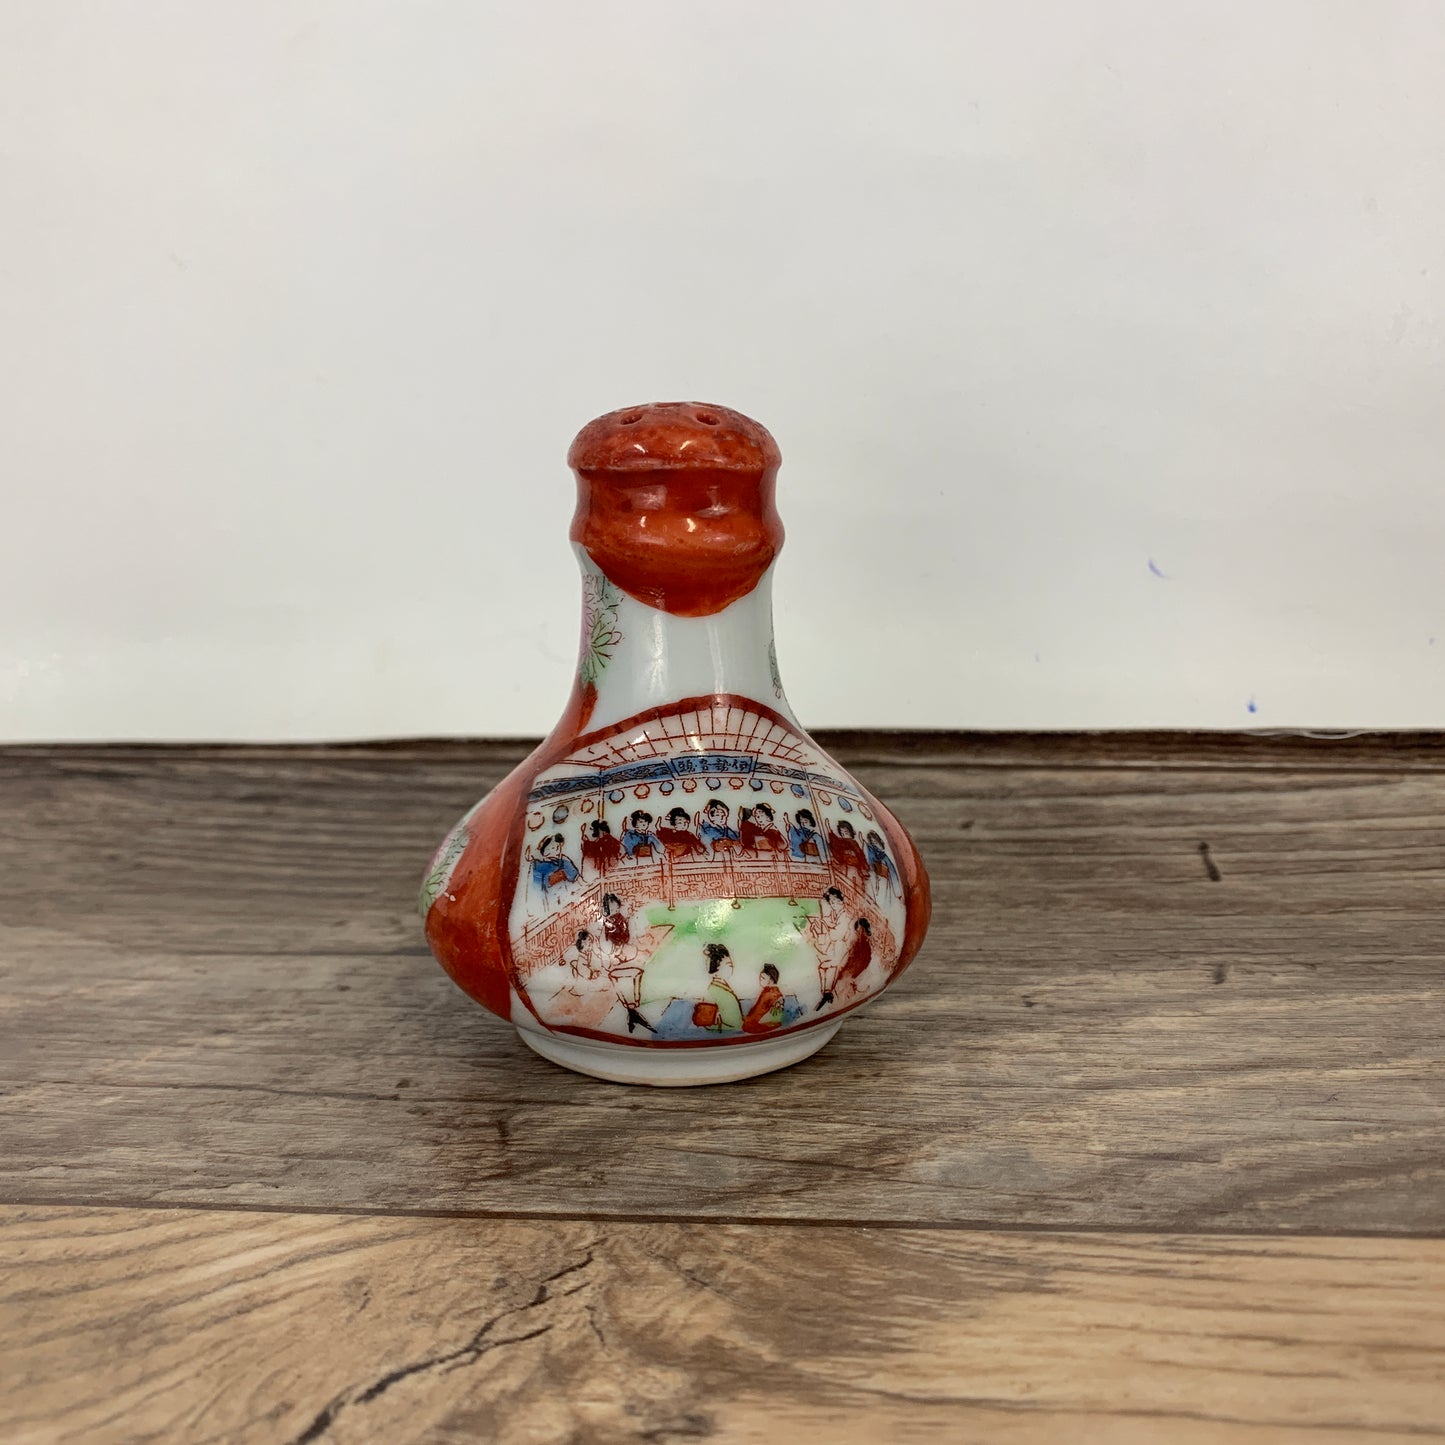 Vintage Salt Shaker with Asian Theme Design